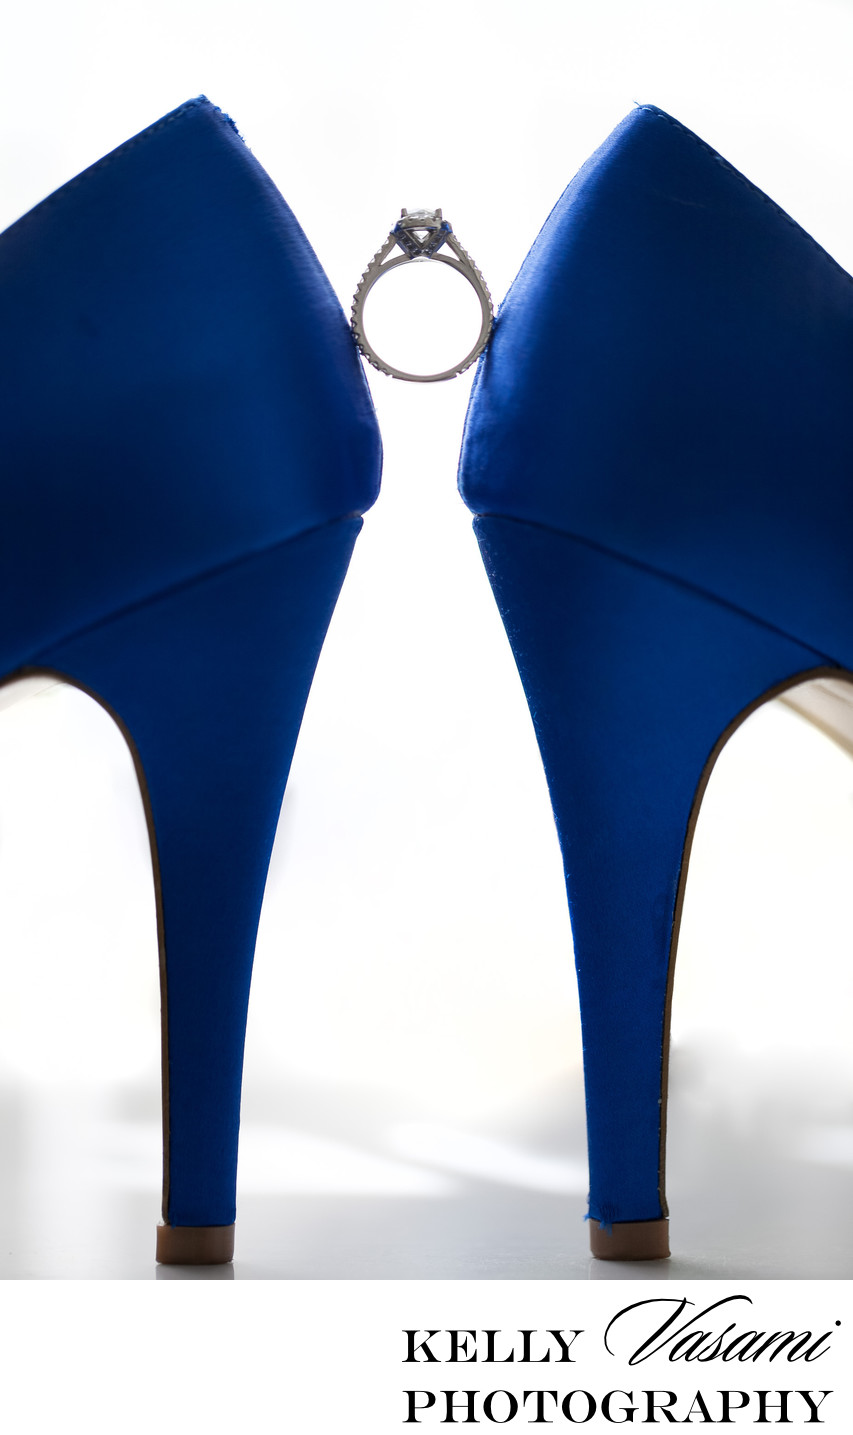 Blue Wedding Shoes & Engagement Ring | Westchester NY